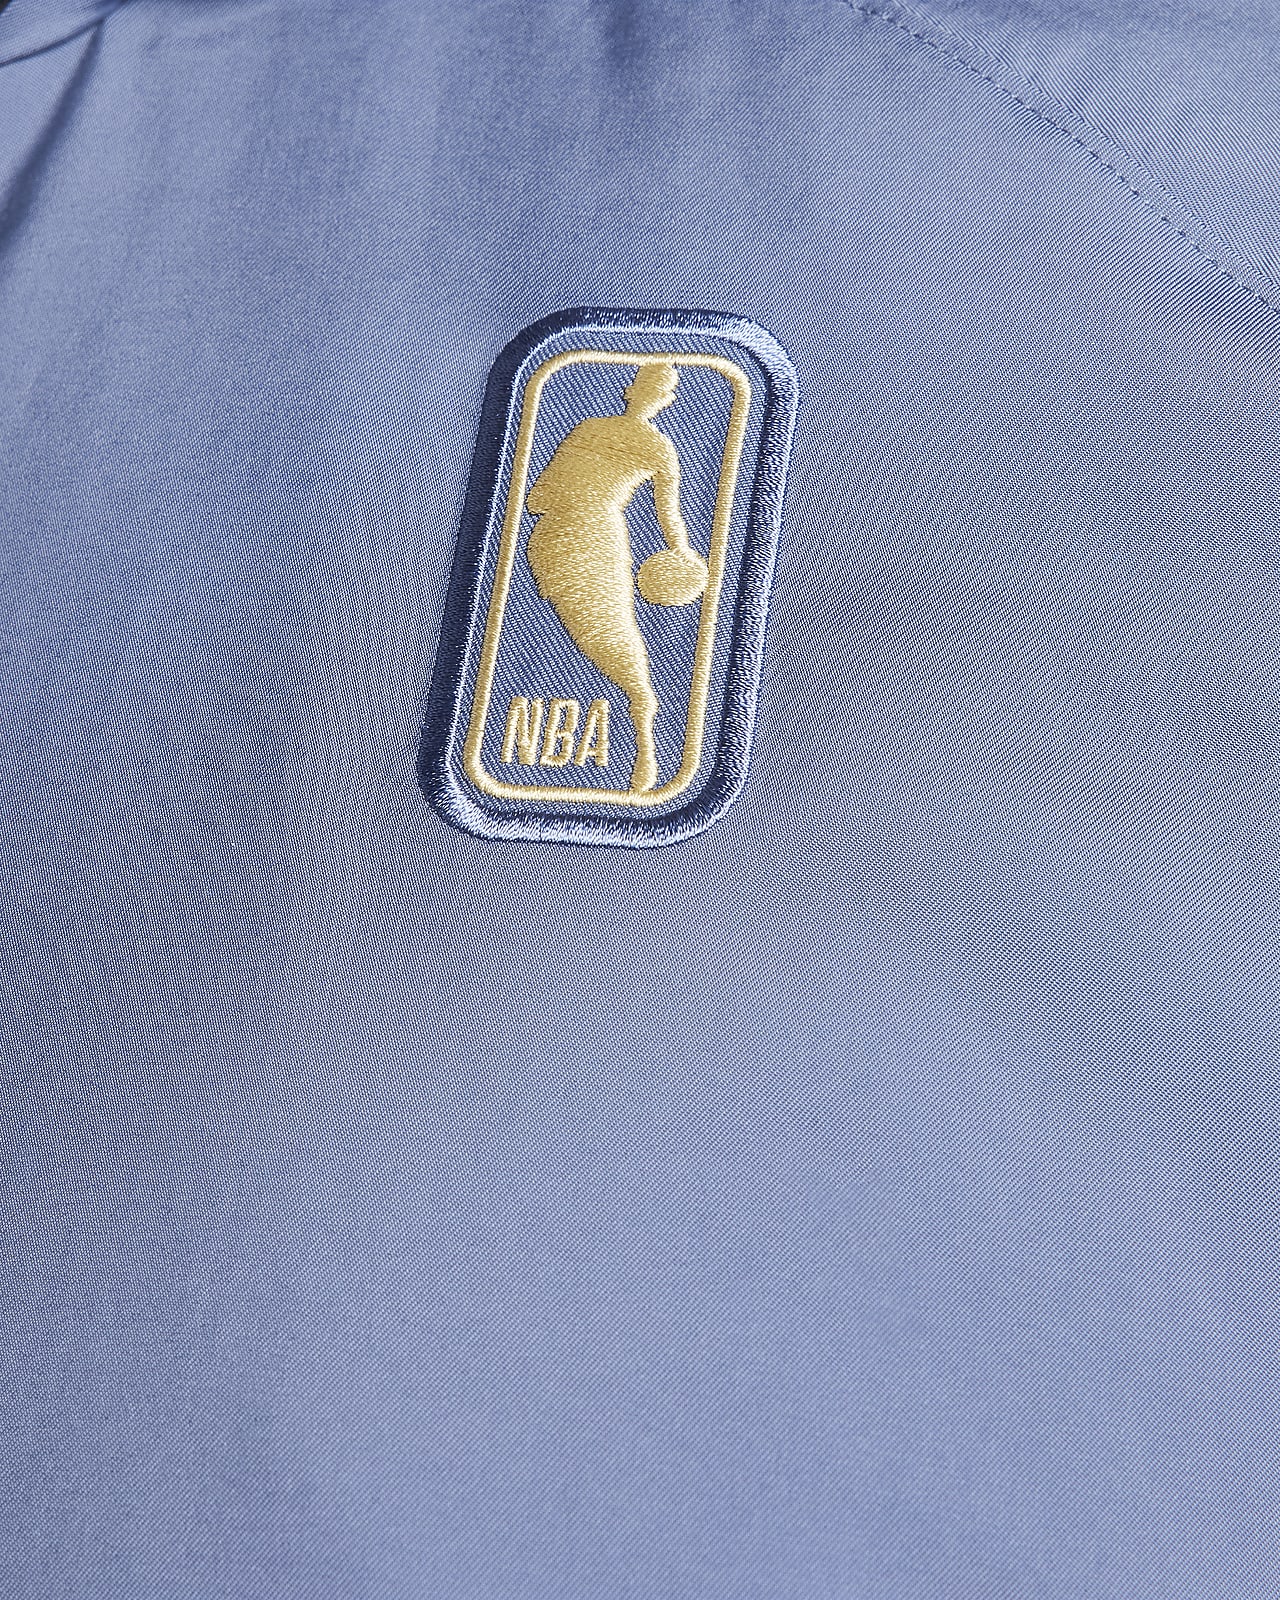 Golden State Warriors Nike men's NBA Warmup jacket L